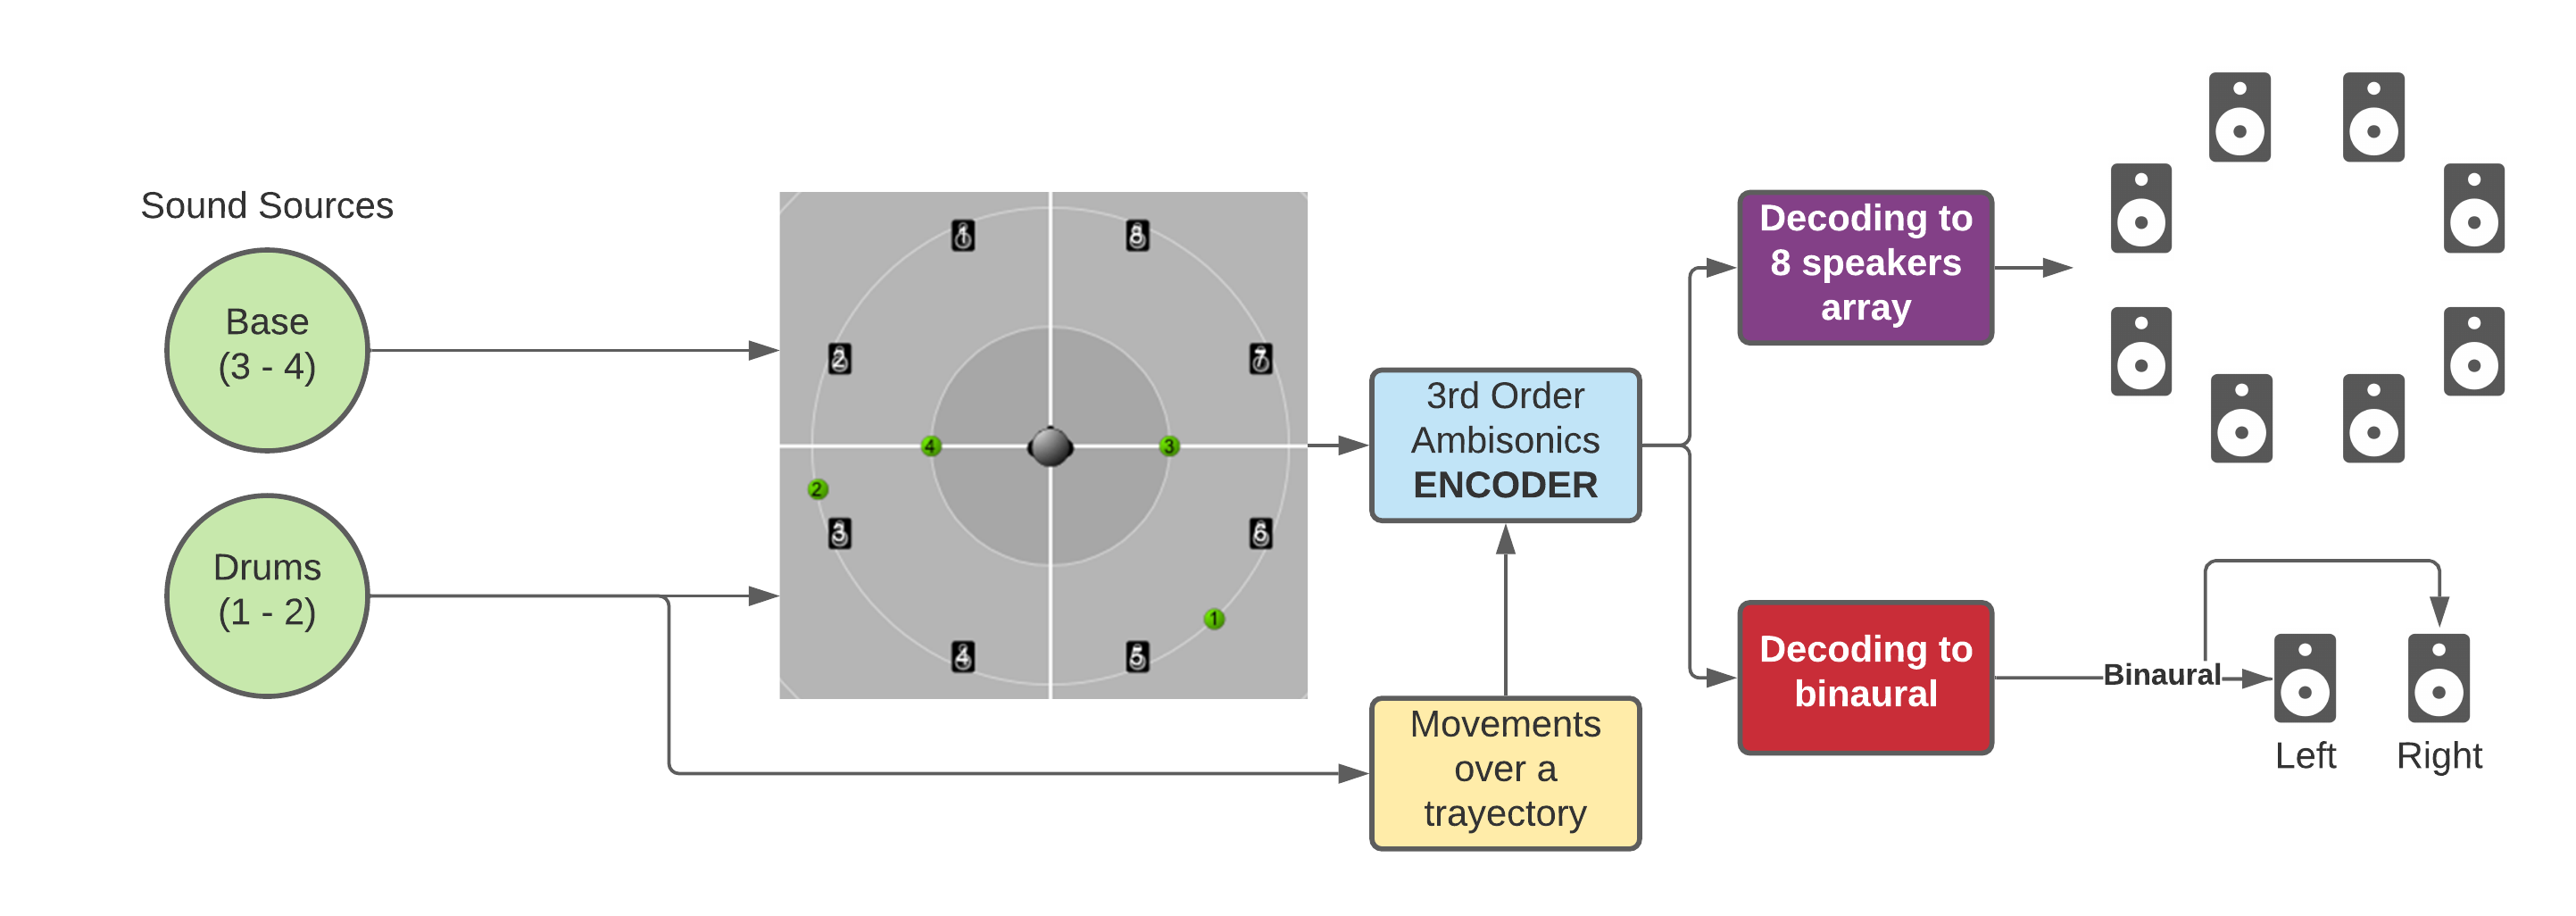 Ambisonics - Encoding and Decoding process